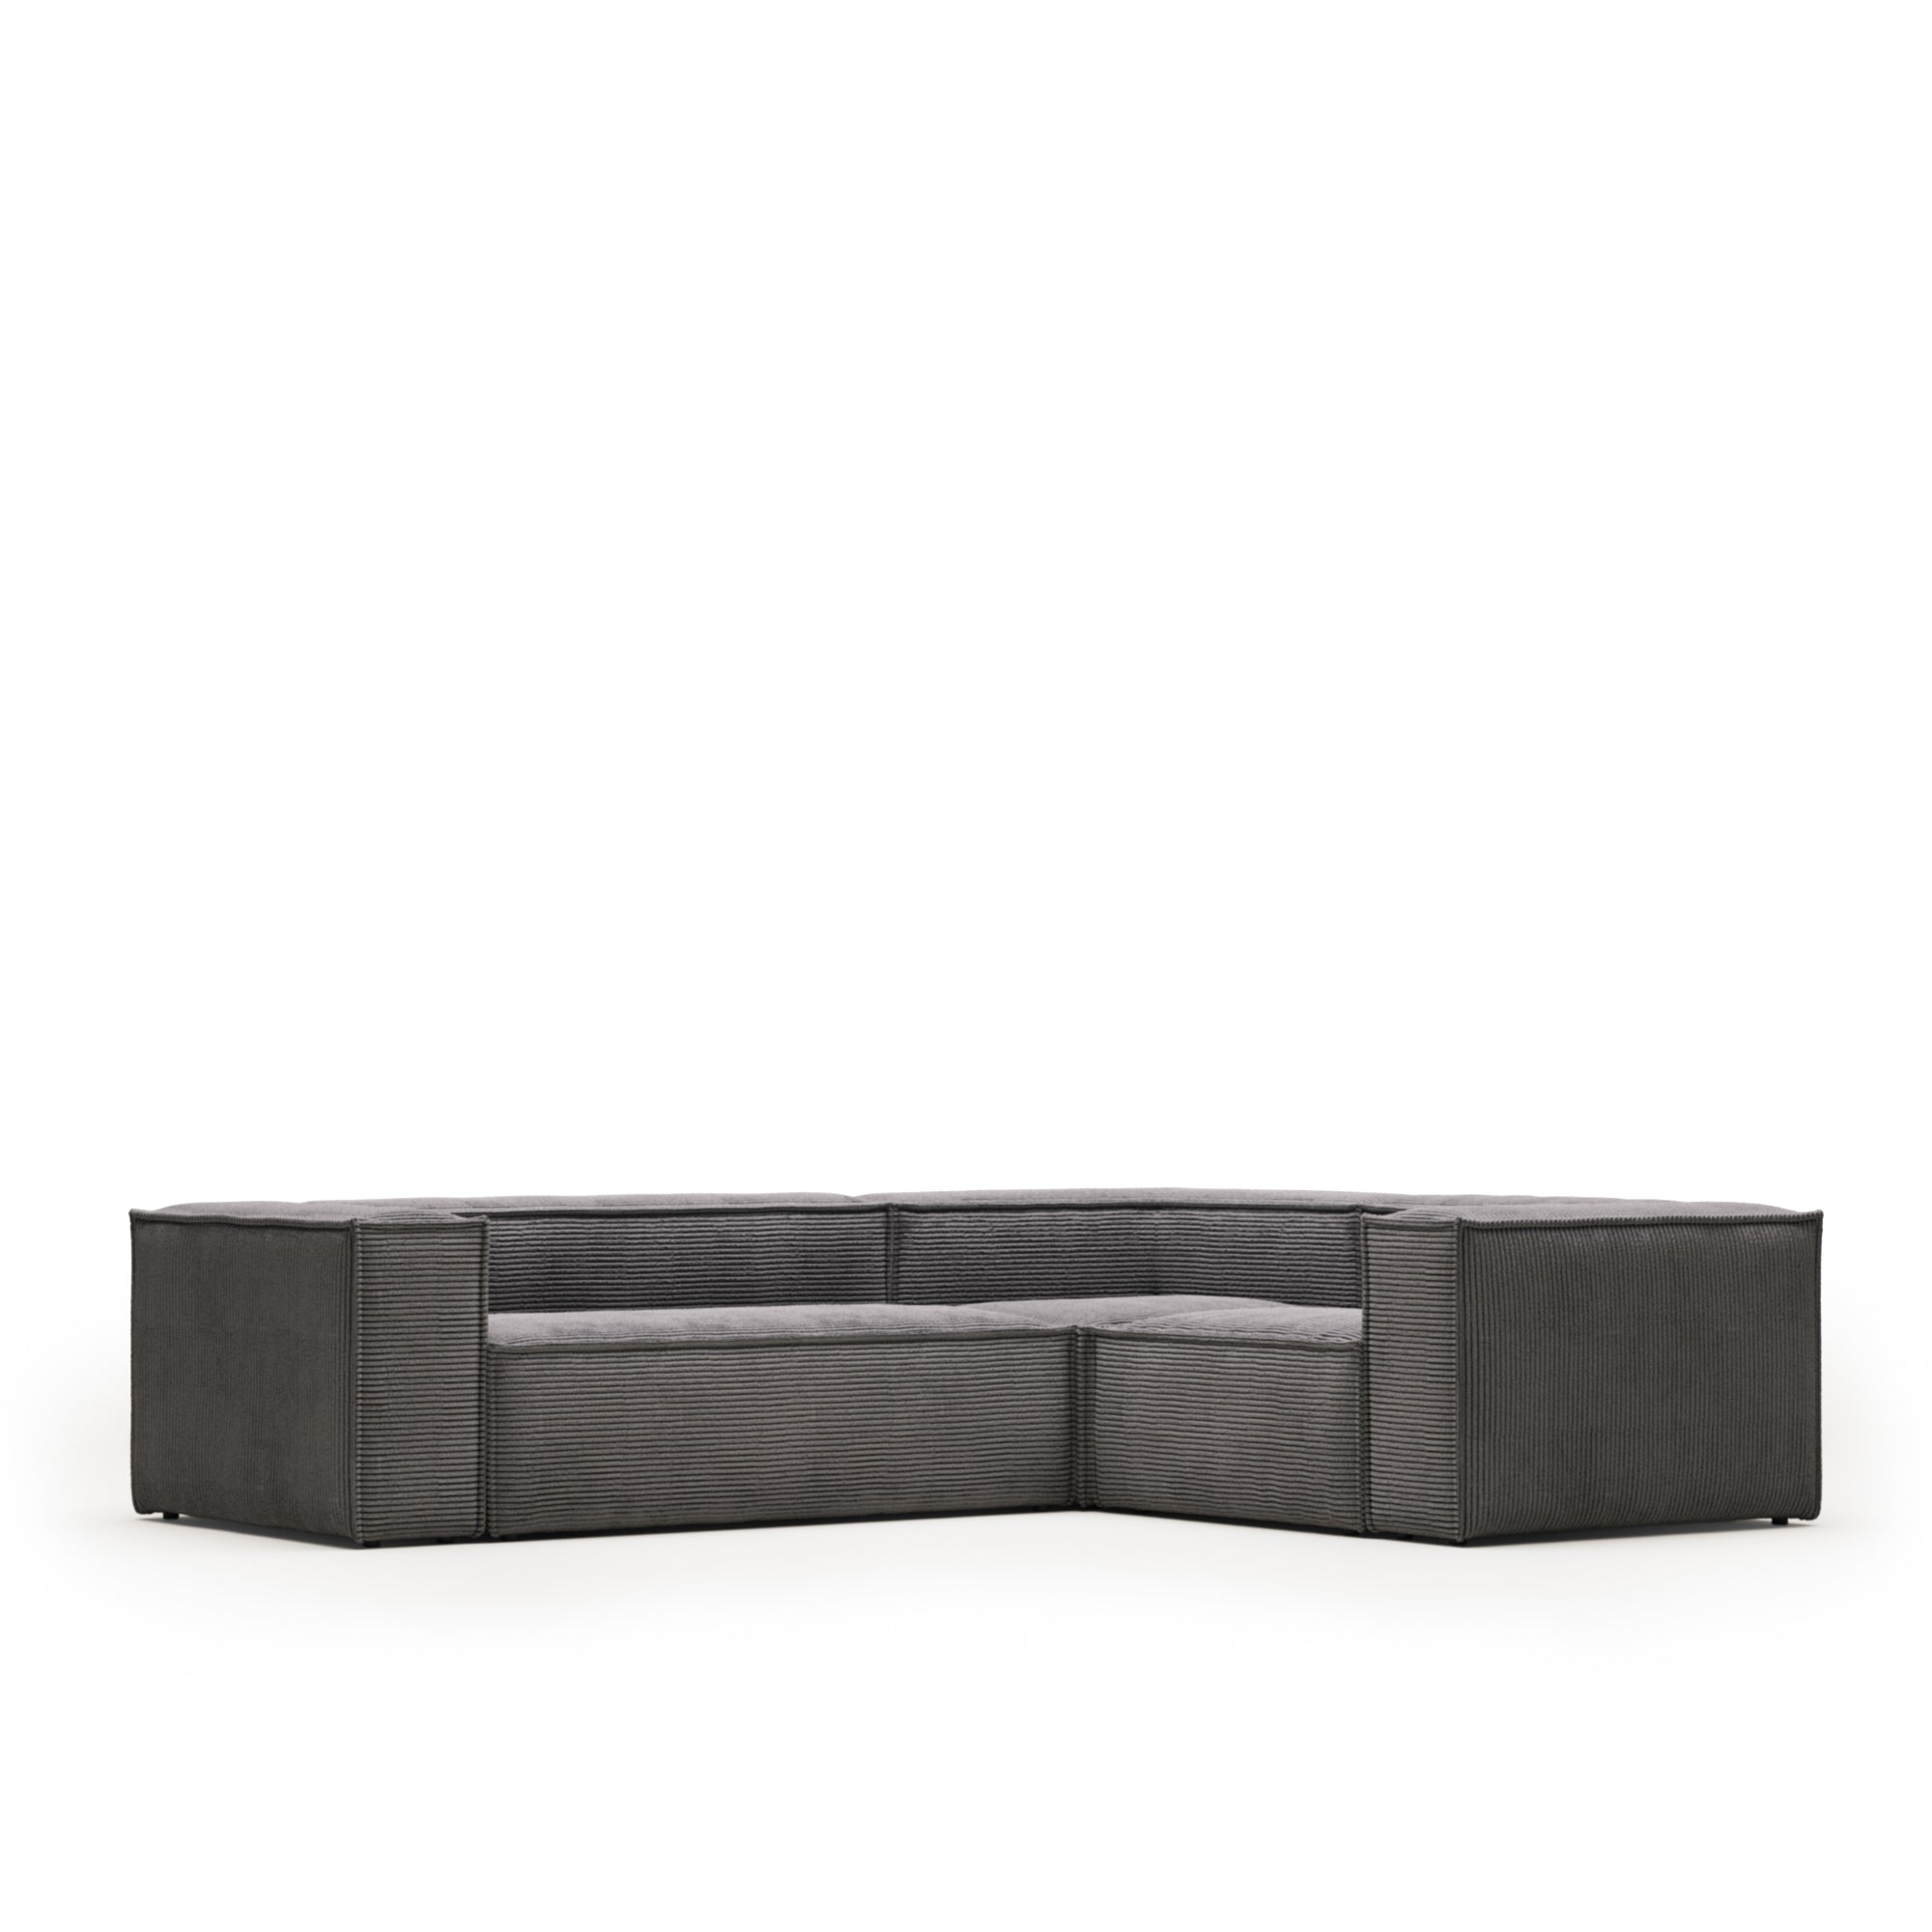 Blok 3 seater corner sofa in grey wide seam corduroy, 290 x 230 cm / 230 cm 290 cm